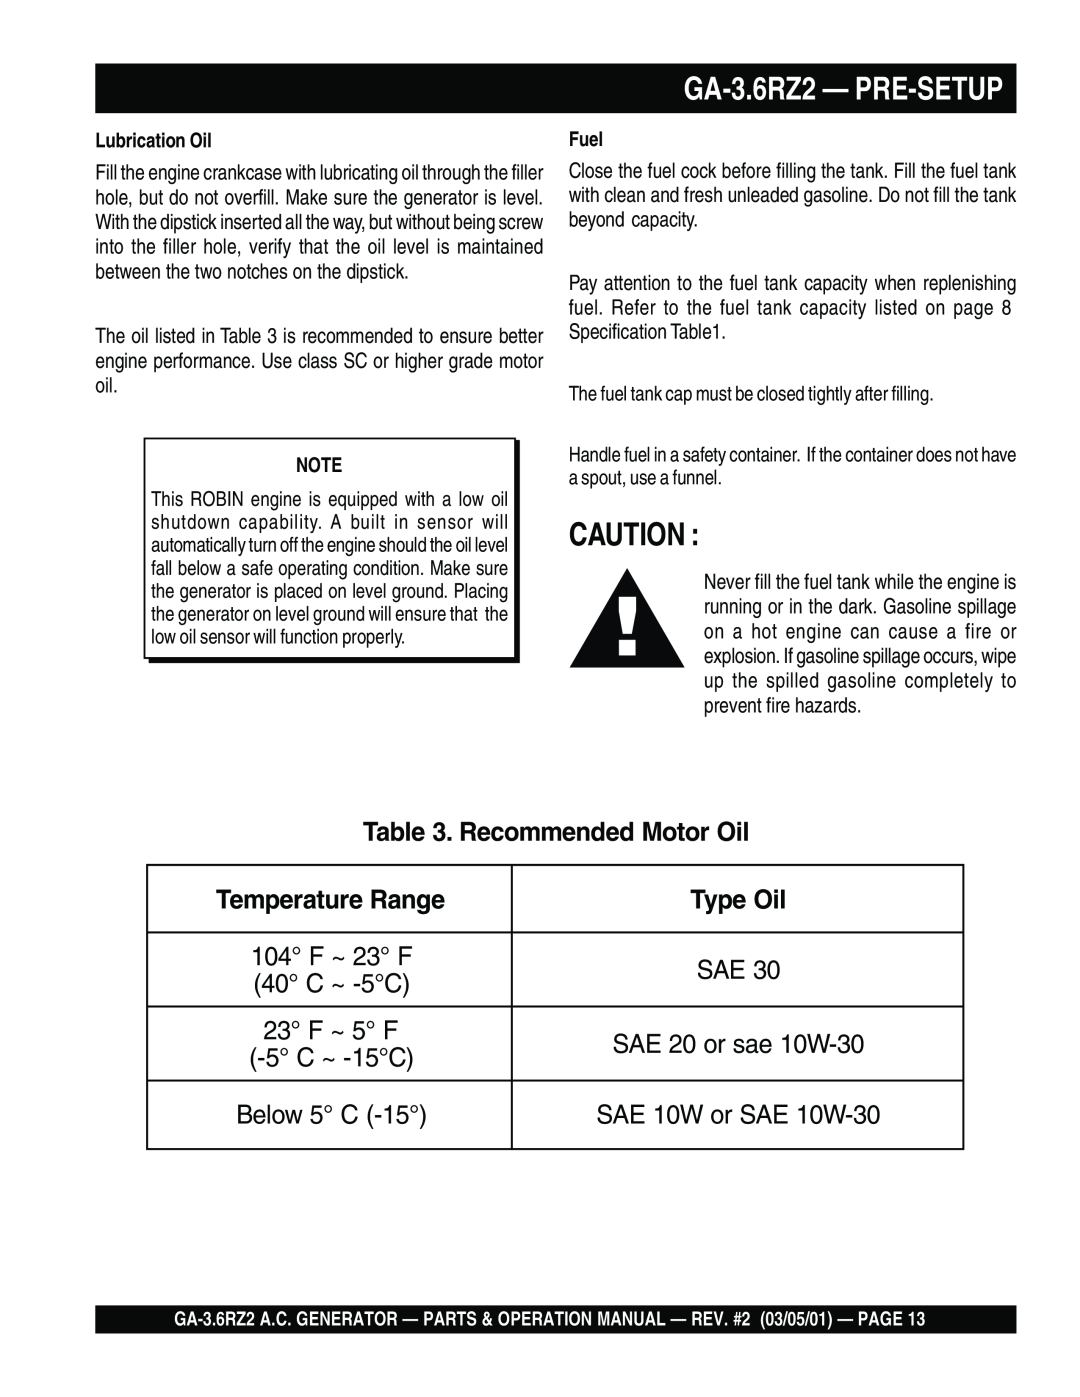 Multiquip Temperature Range, Type Oil, GA-3.6RZ2- PRE-SETUP, Recommended Motor Oil, Below 5 C, SAE 10W or SAE 10W-30 